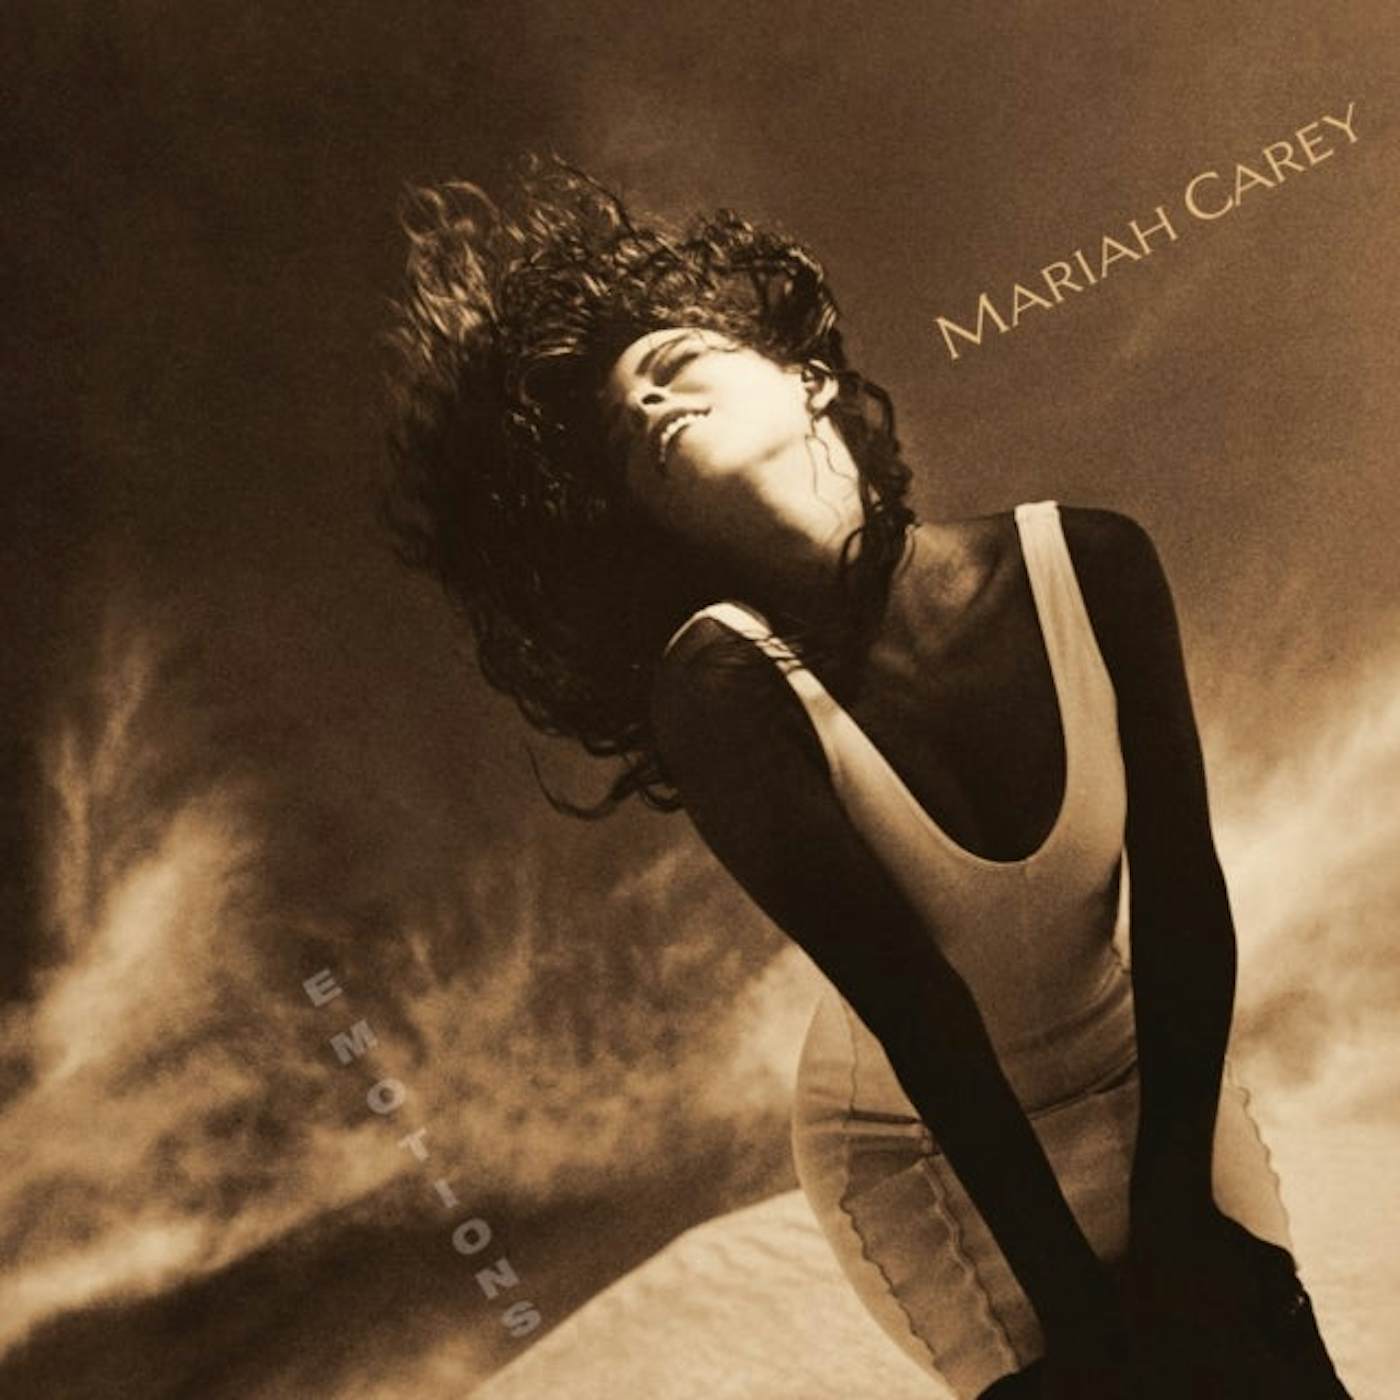 Mariah Carey LP Vinyl Record - Emotions